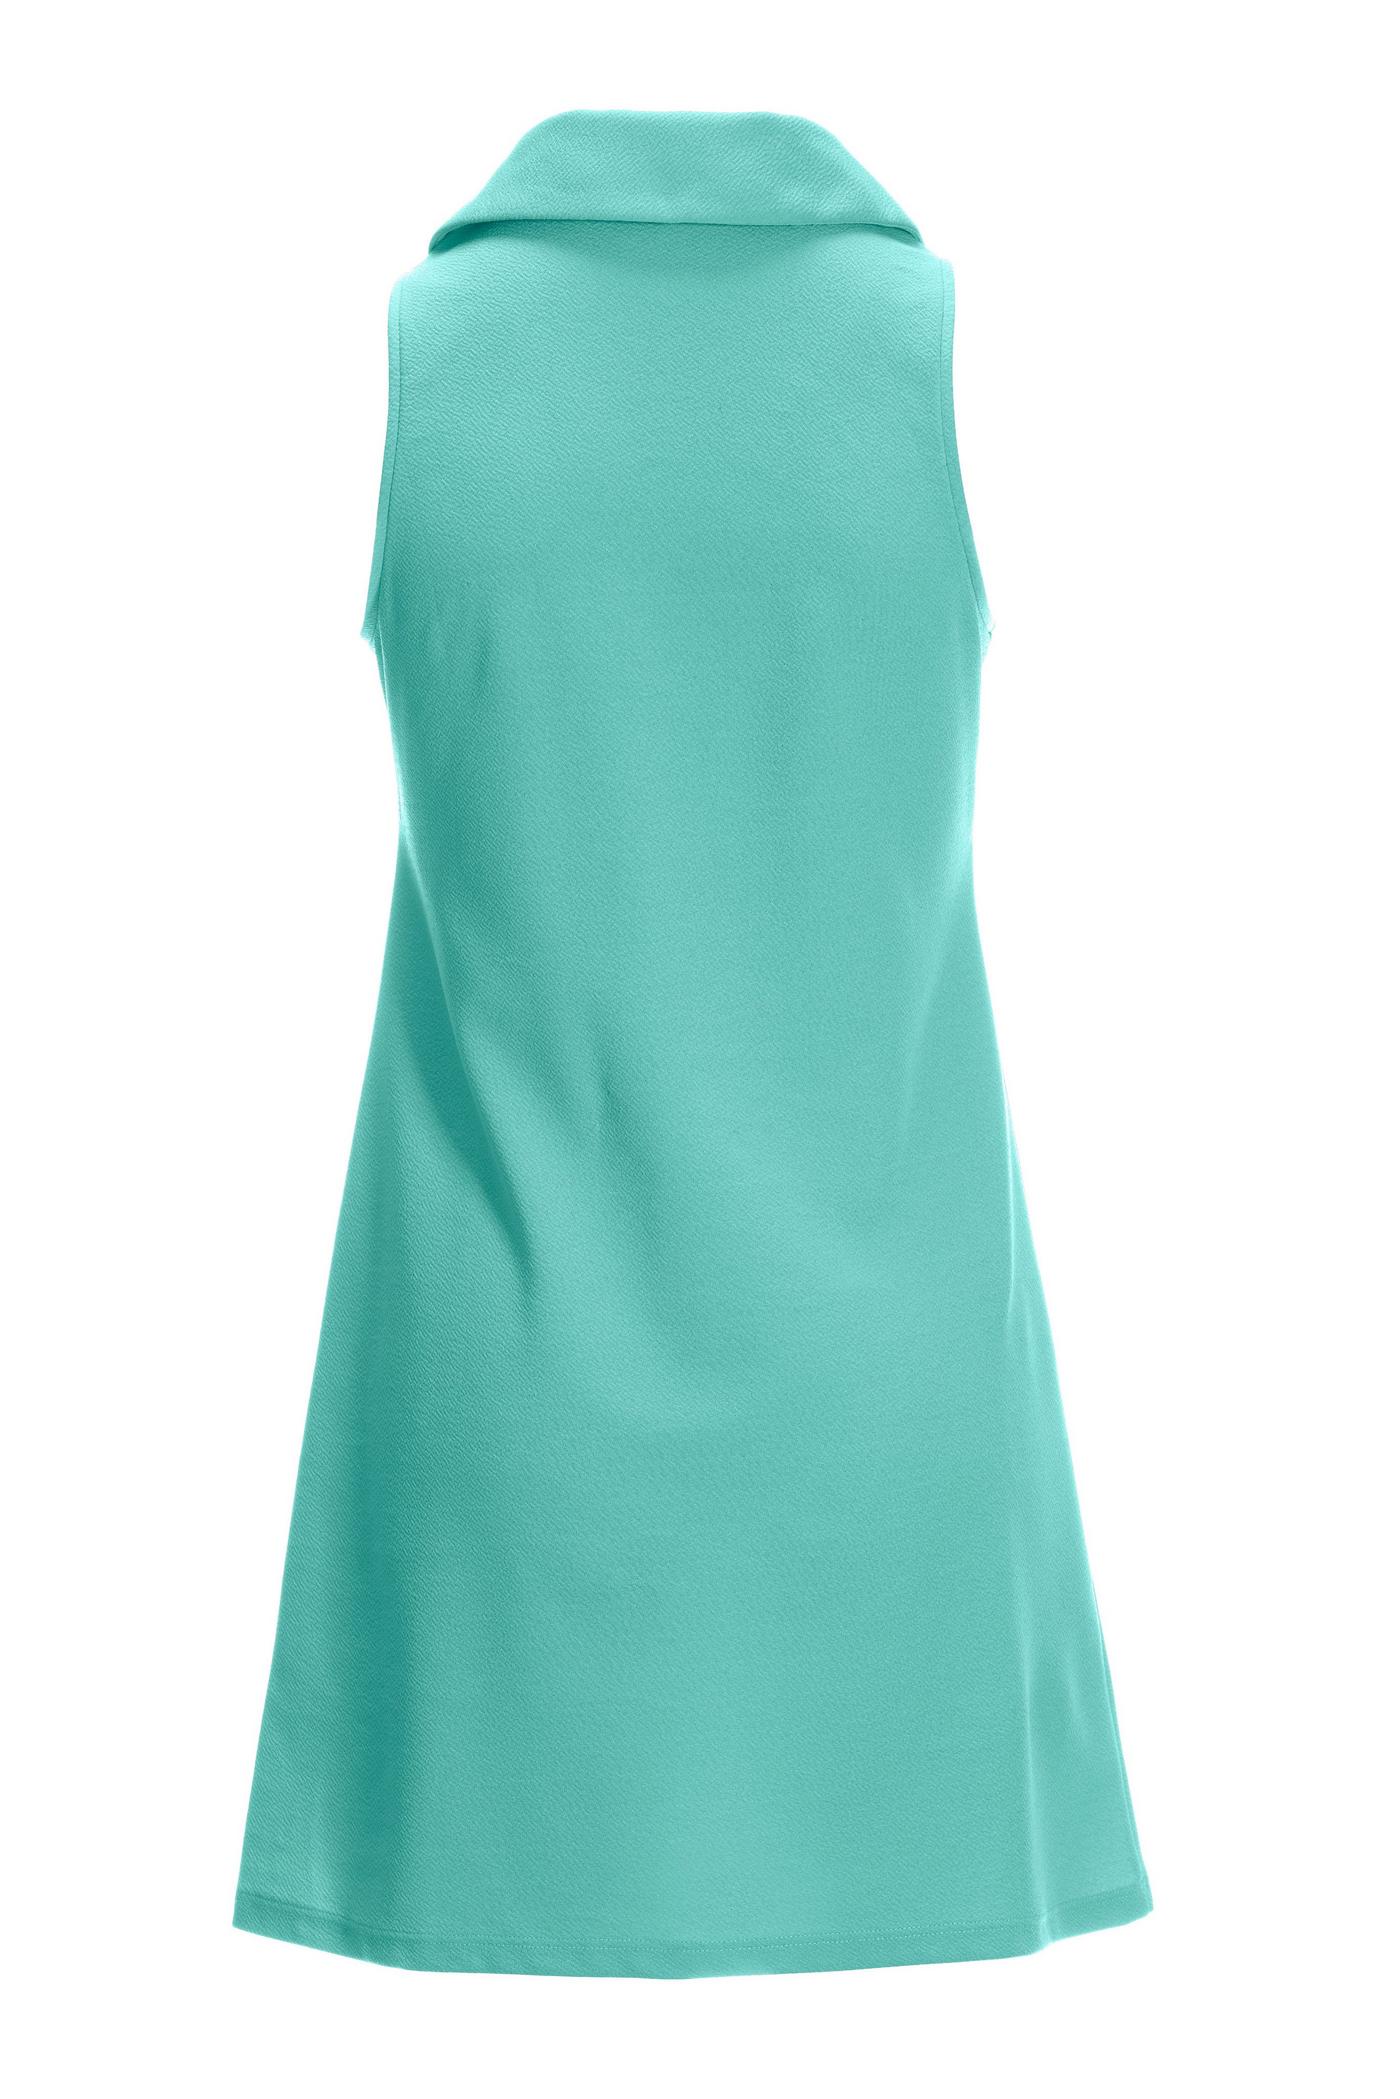 Cushine Target Slip Dress Colorblock Women 8 Pleated Green Blue V